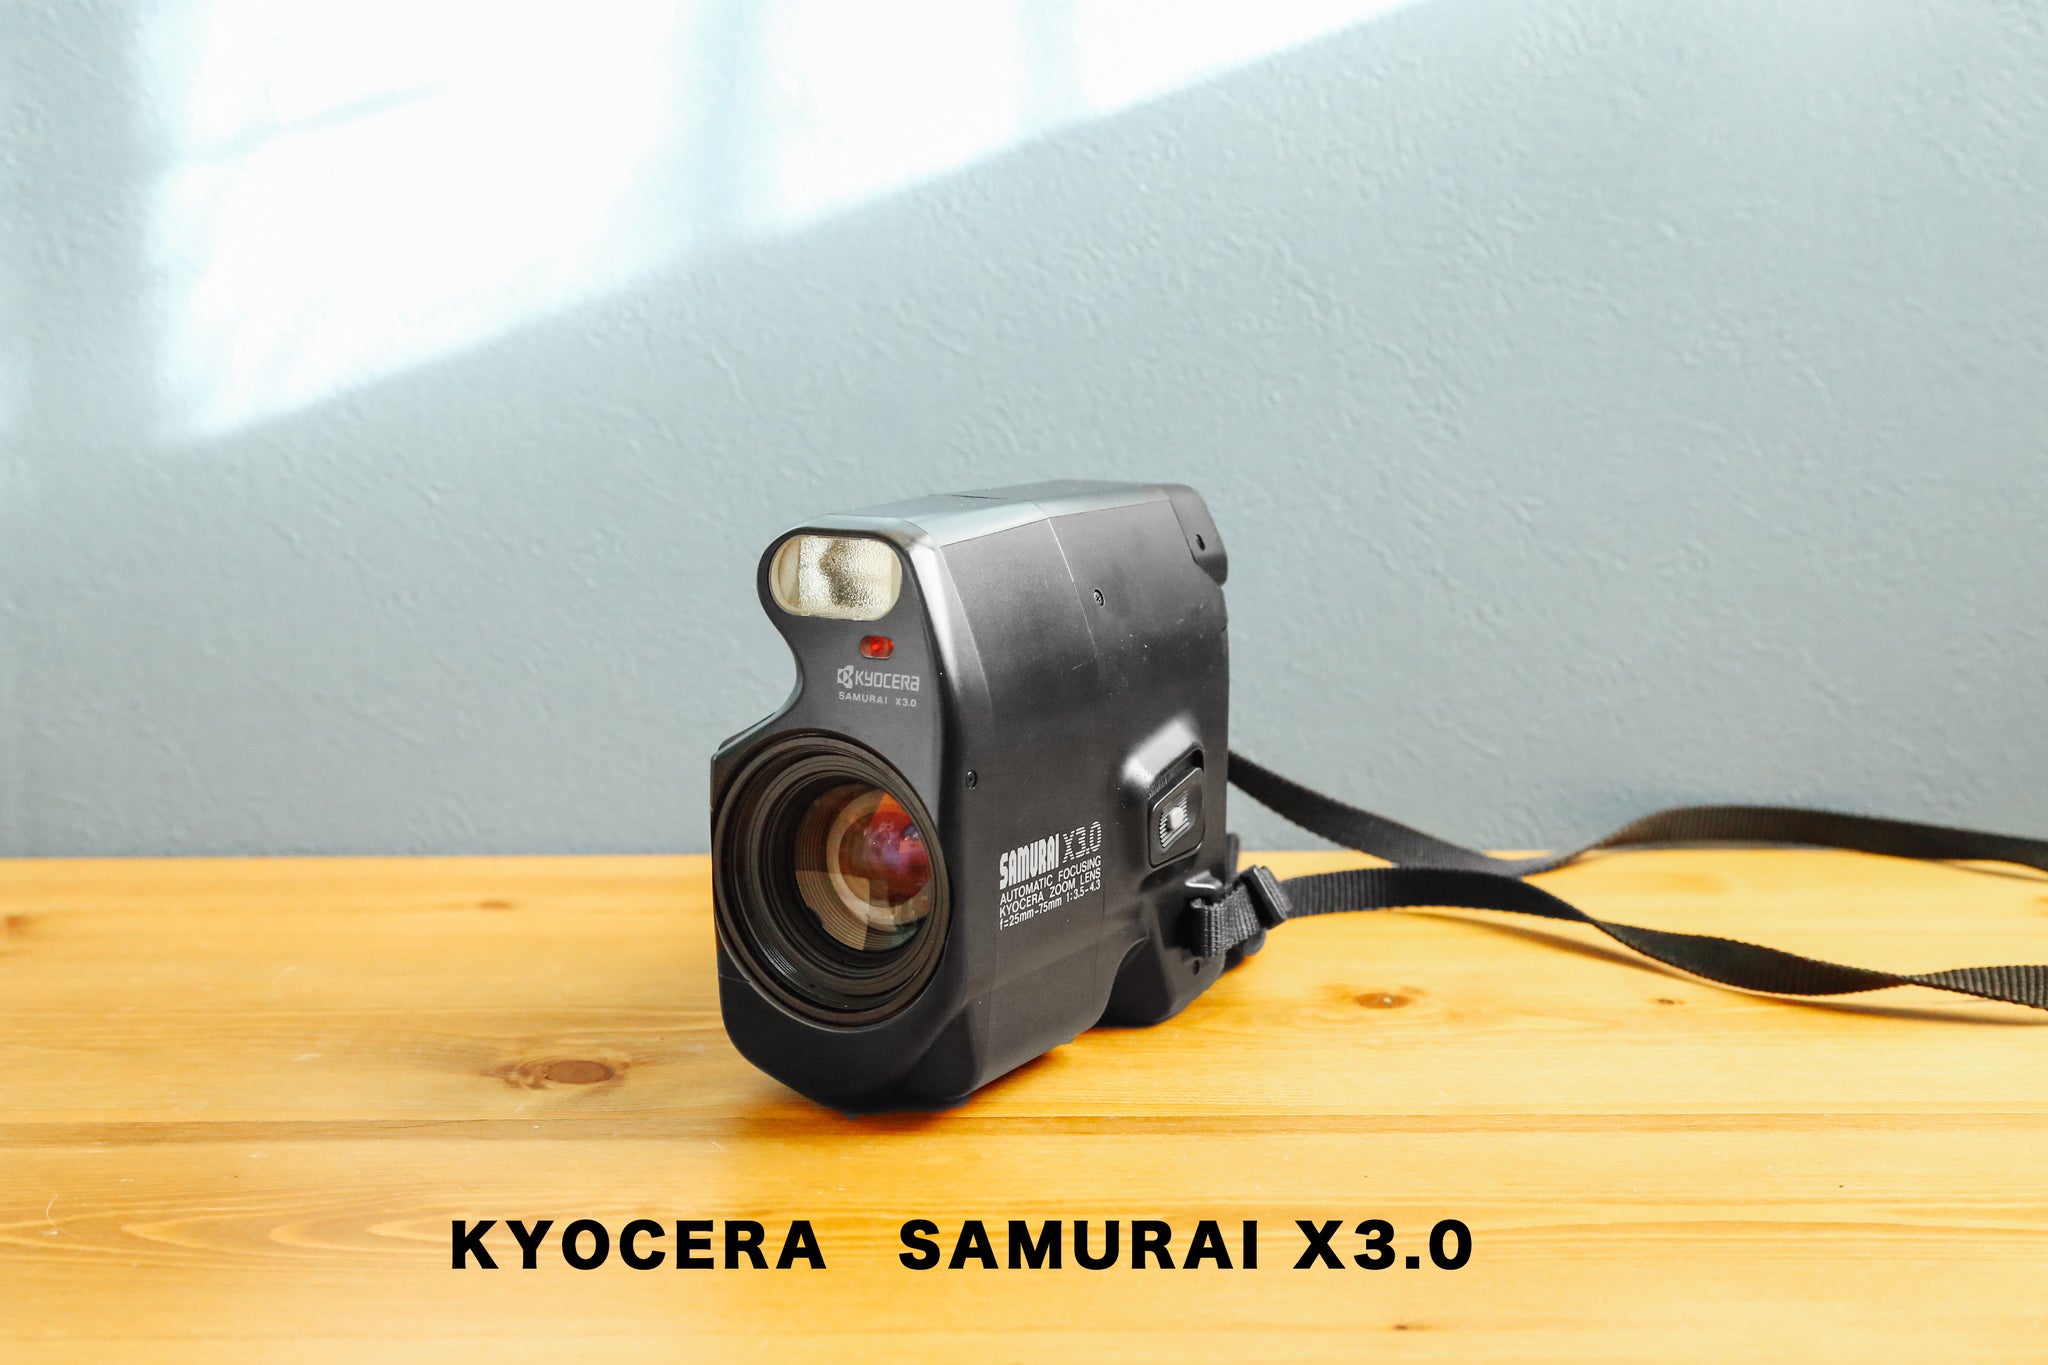 KYOCERA SAMURAI X3.0【完動品】【実写済み】 – Ein Camera